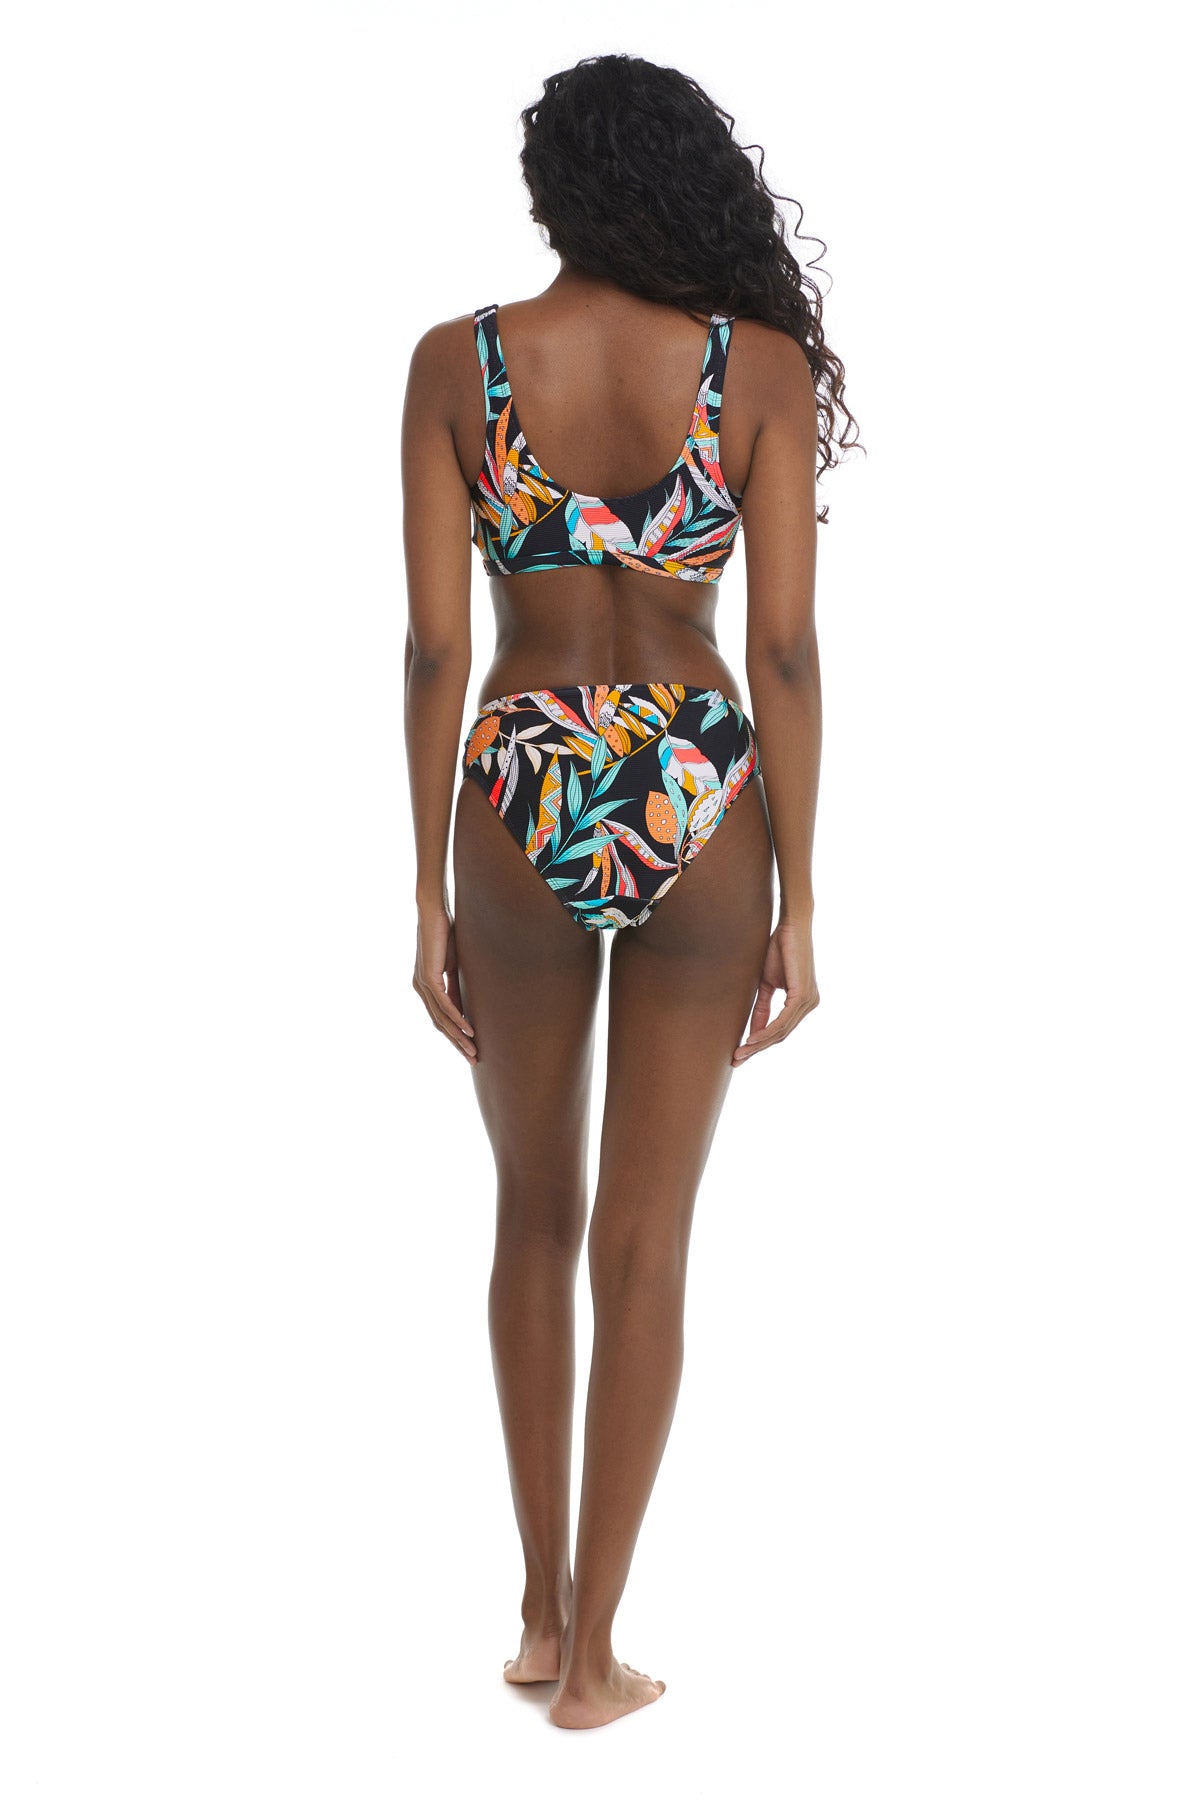 Body Glove: Los Cabos May Scoop Bikini Top – Swim City